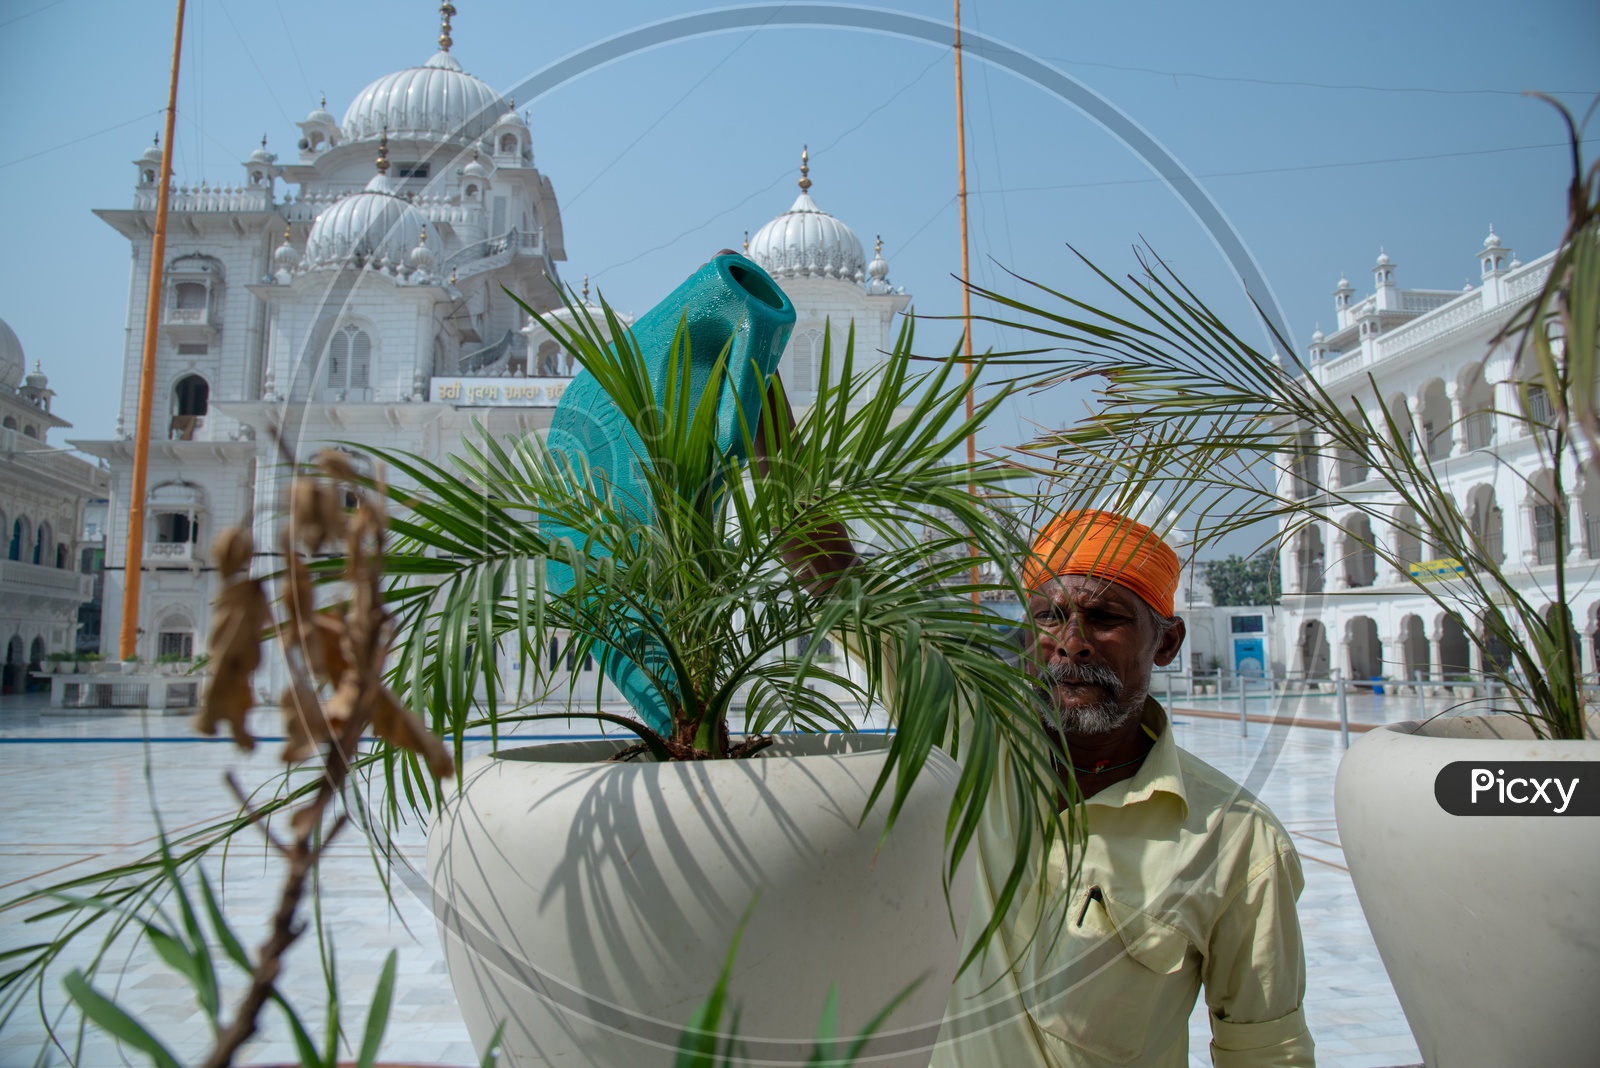 A Sikh Man Watering  the Plants in Gurudwara